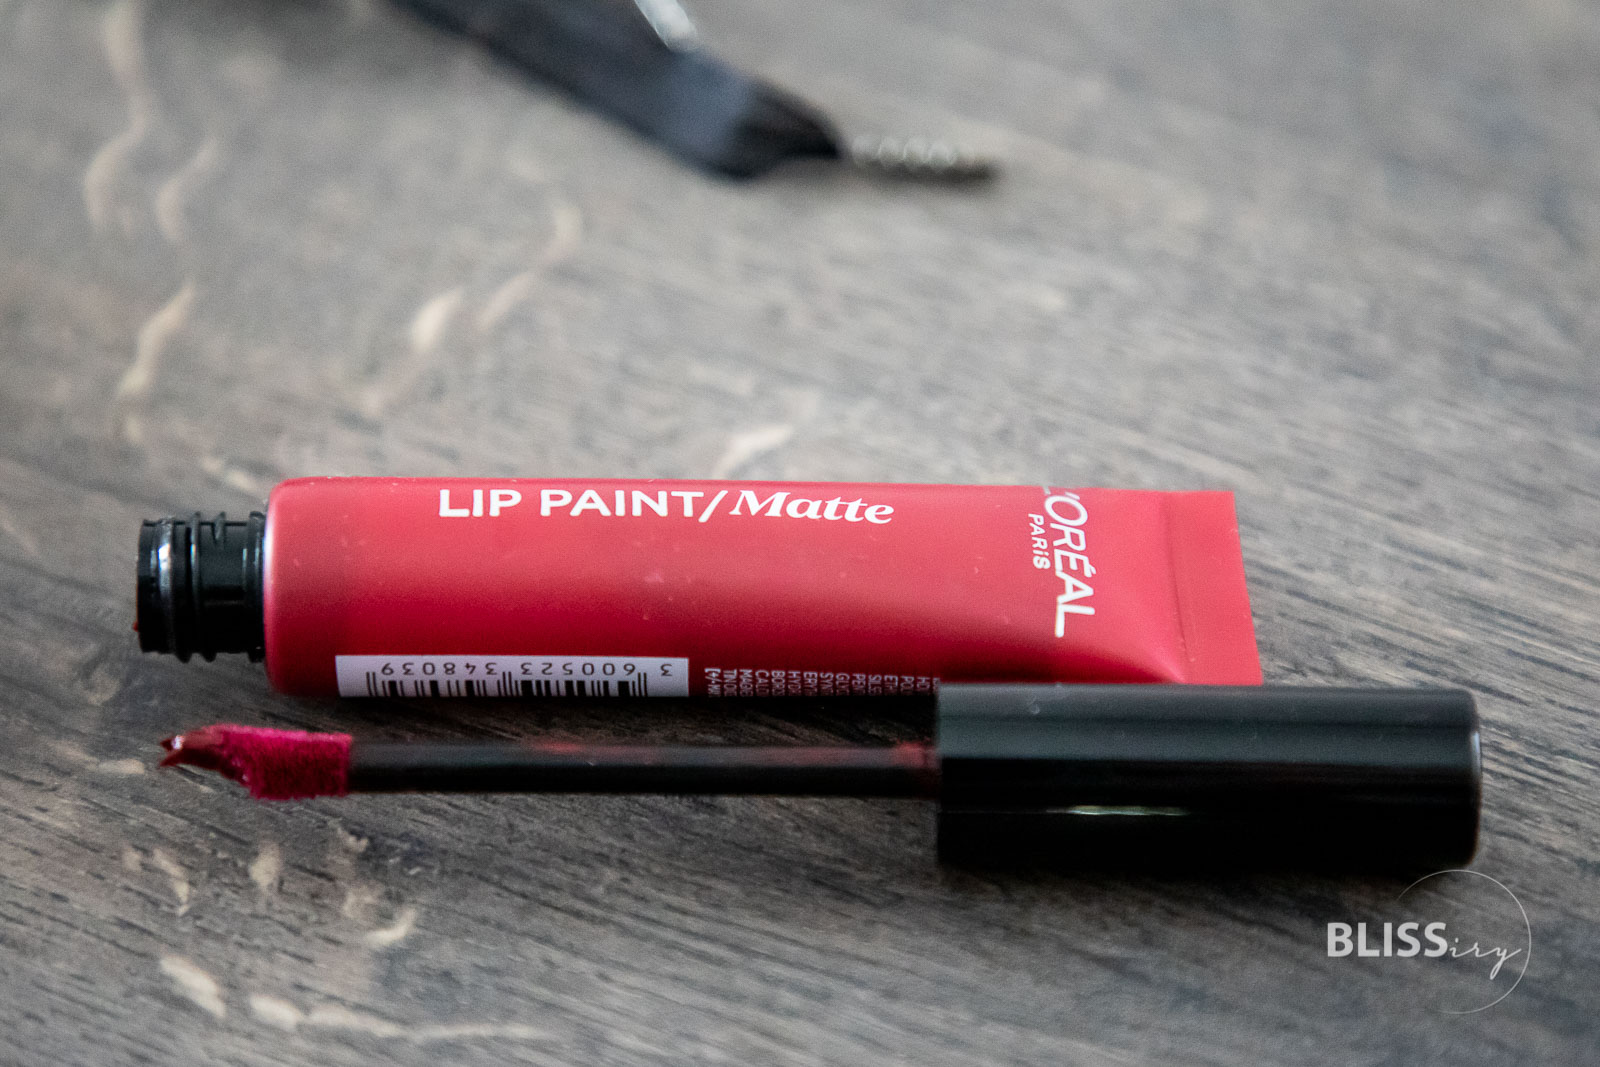 Rote, matte Lippenstifte - beste matte Farben für rote Lippen - Top 5 rote Lippenstifte im Test vom MAC, Louboutin bis Chanel